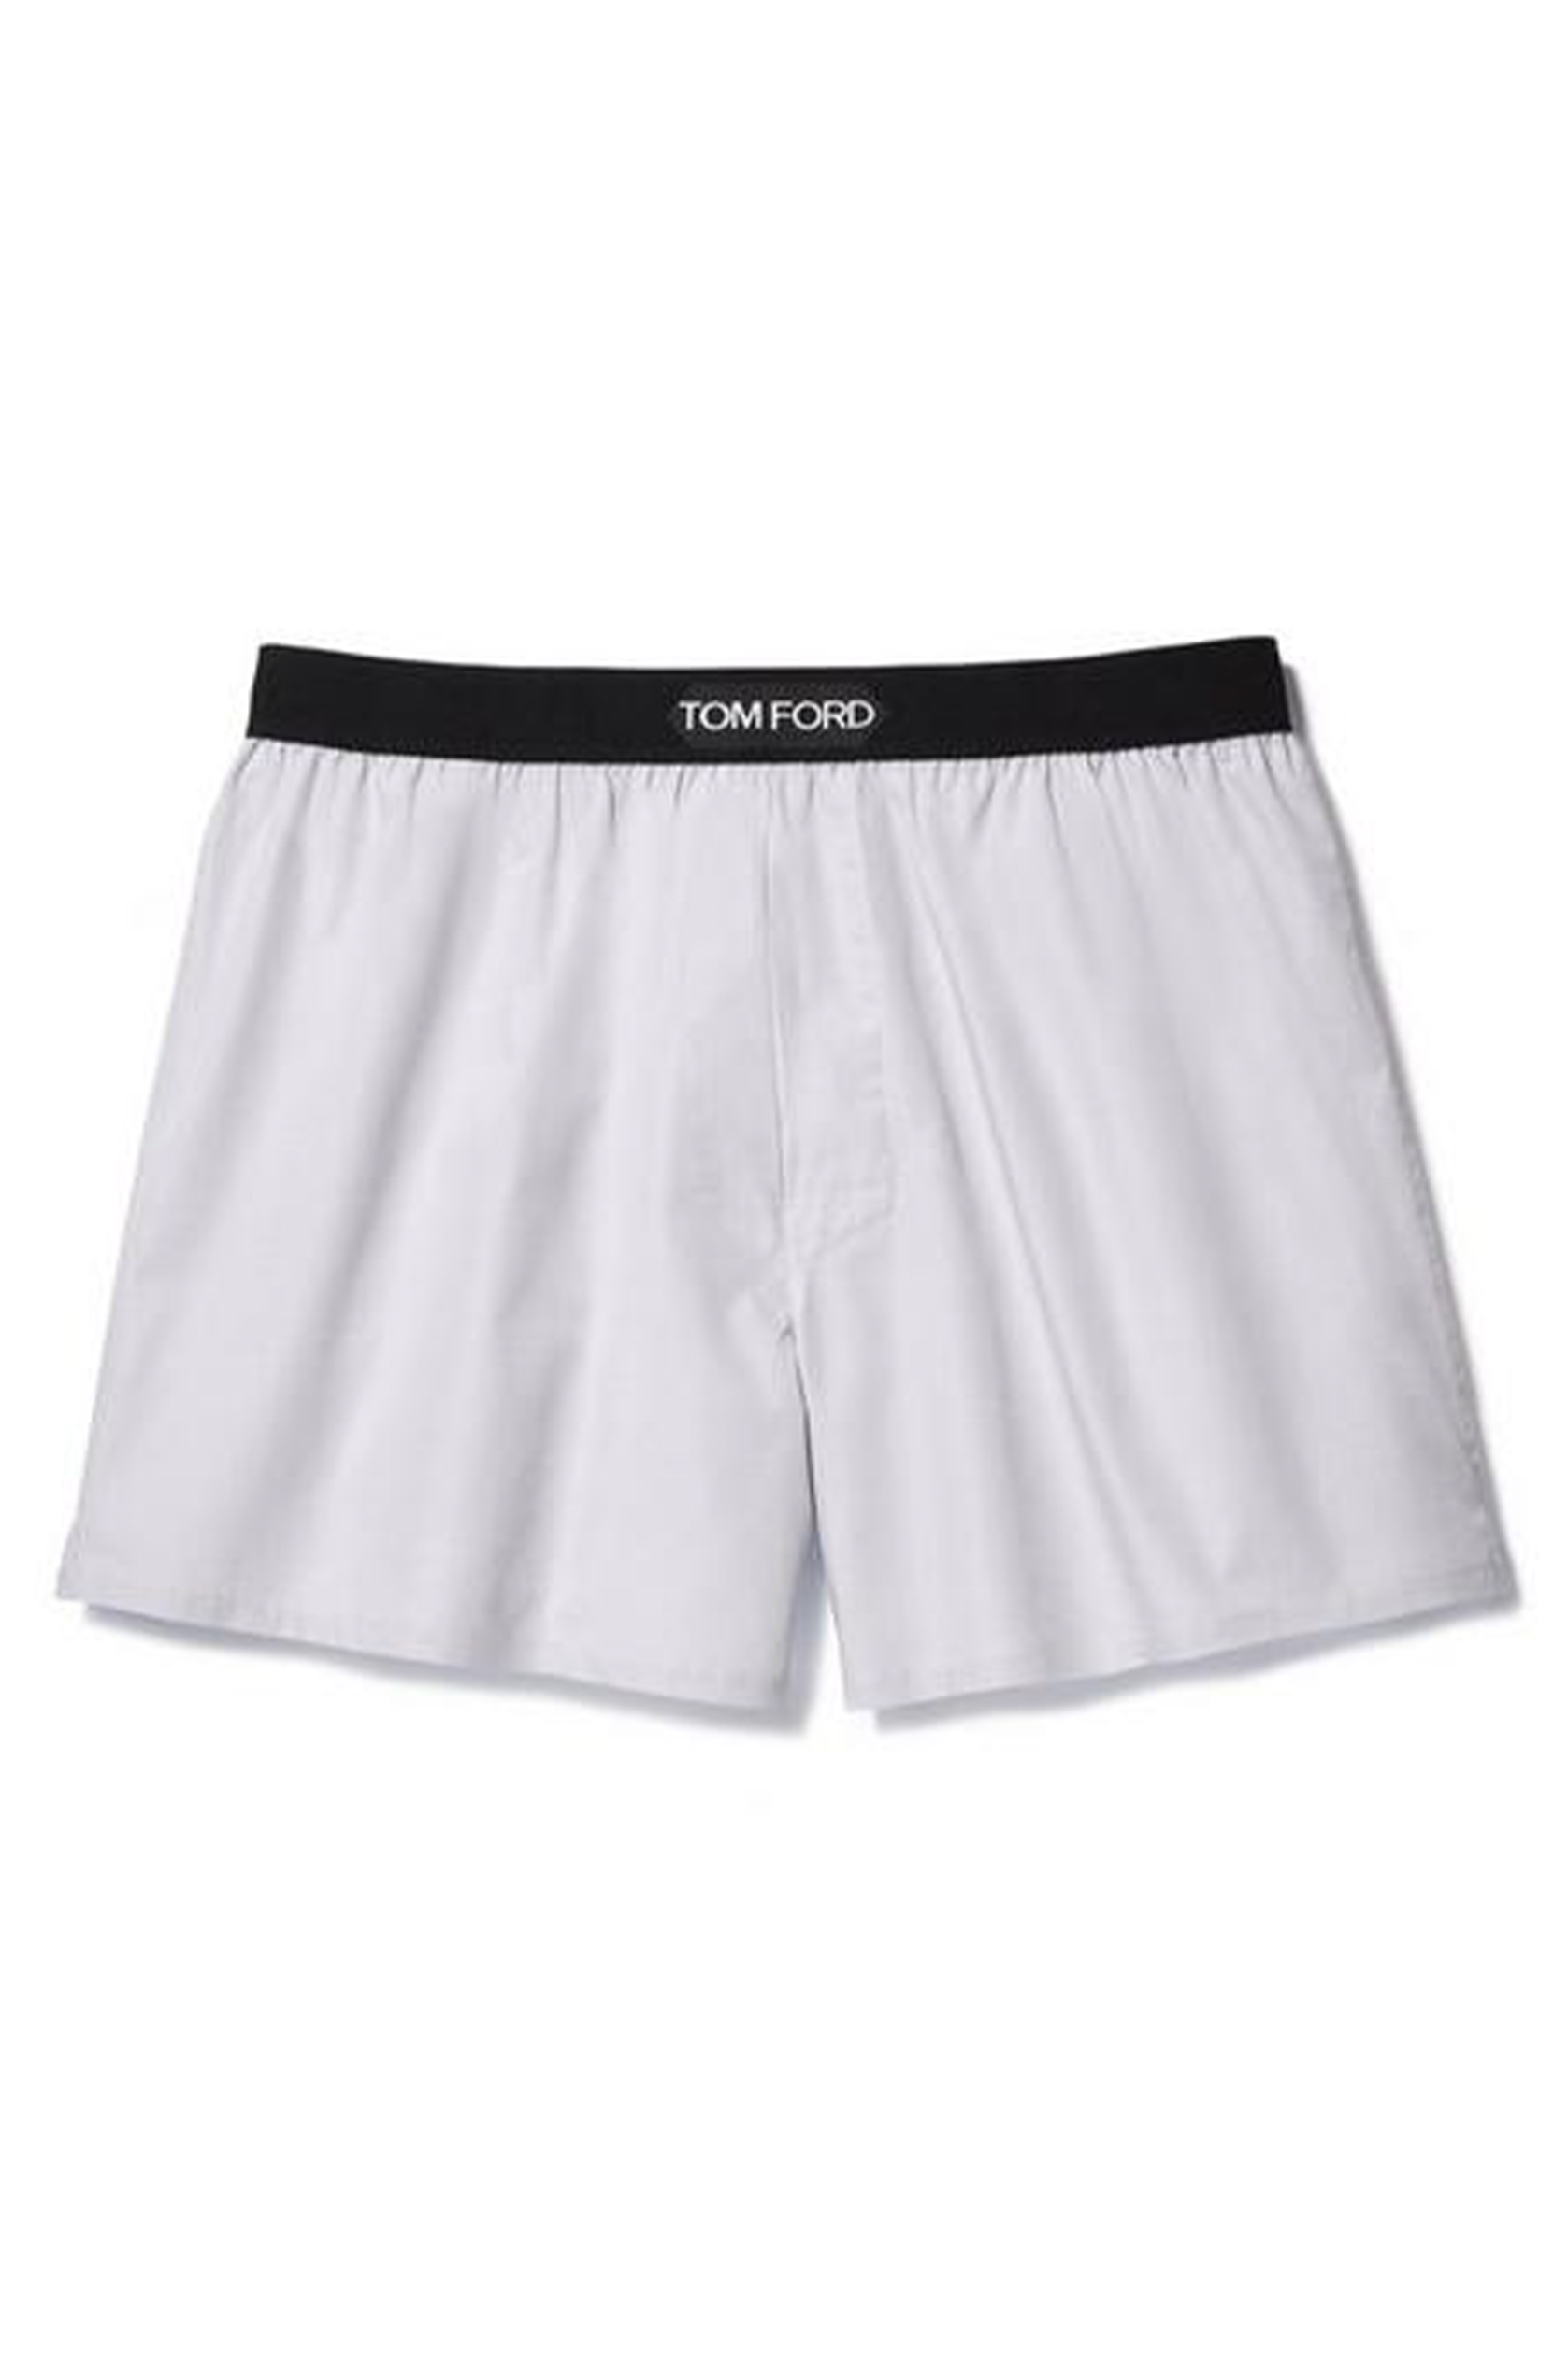 TOM FORD Cotton Boxers | Boxershorts | Underwear & Beachwear | Clothing ...